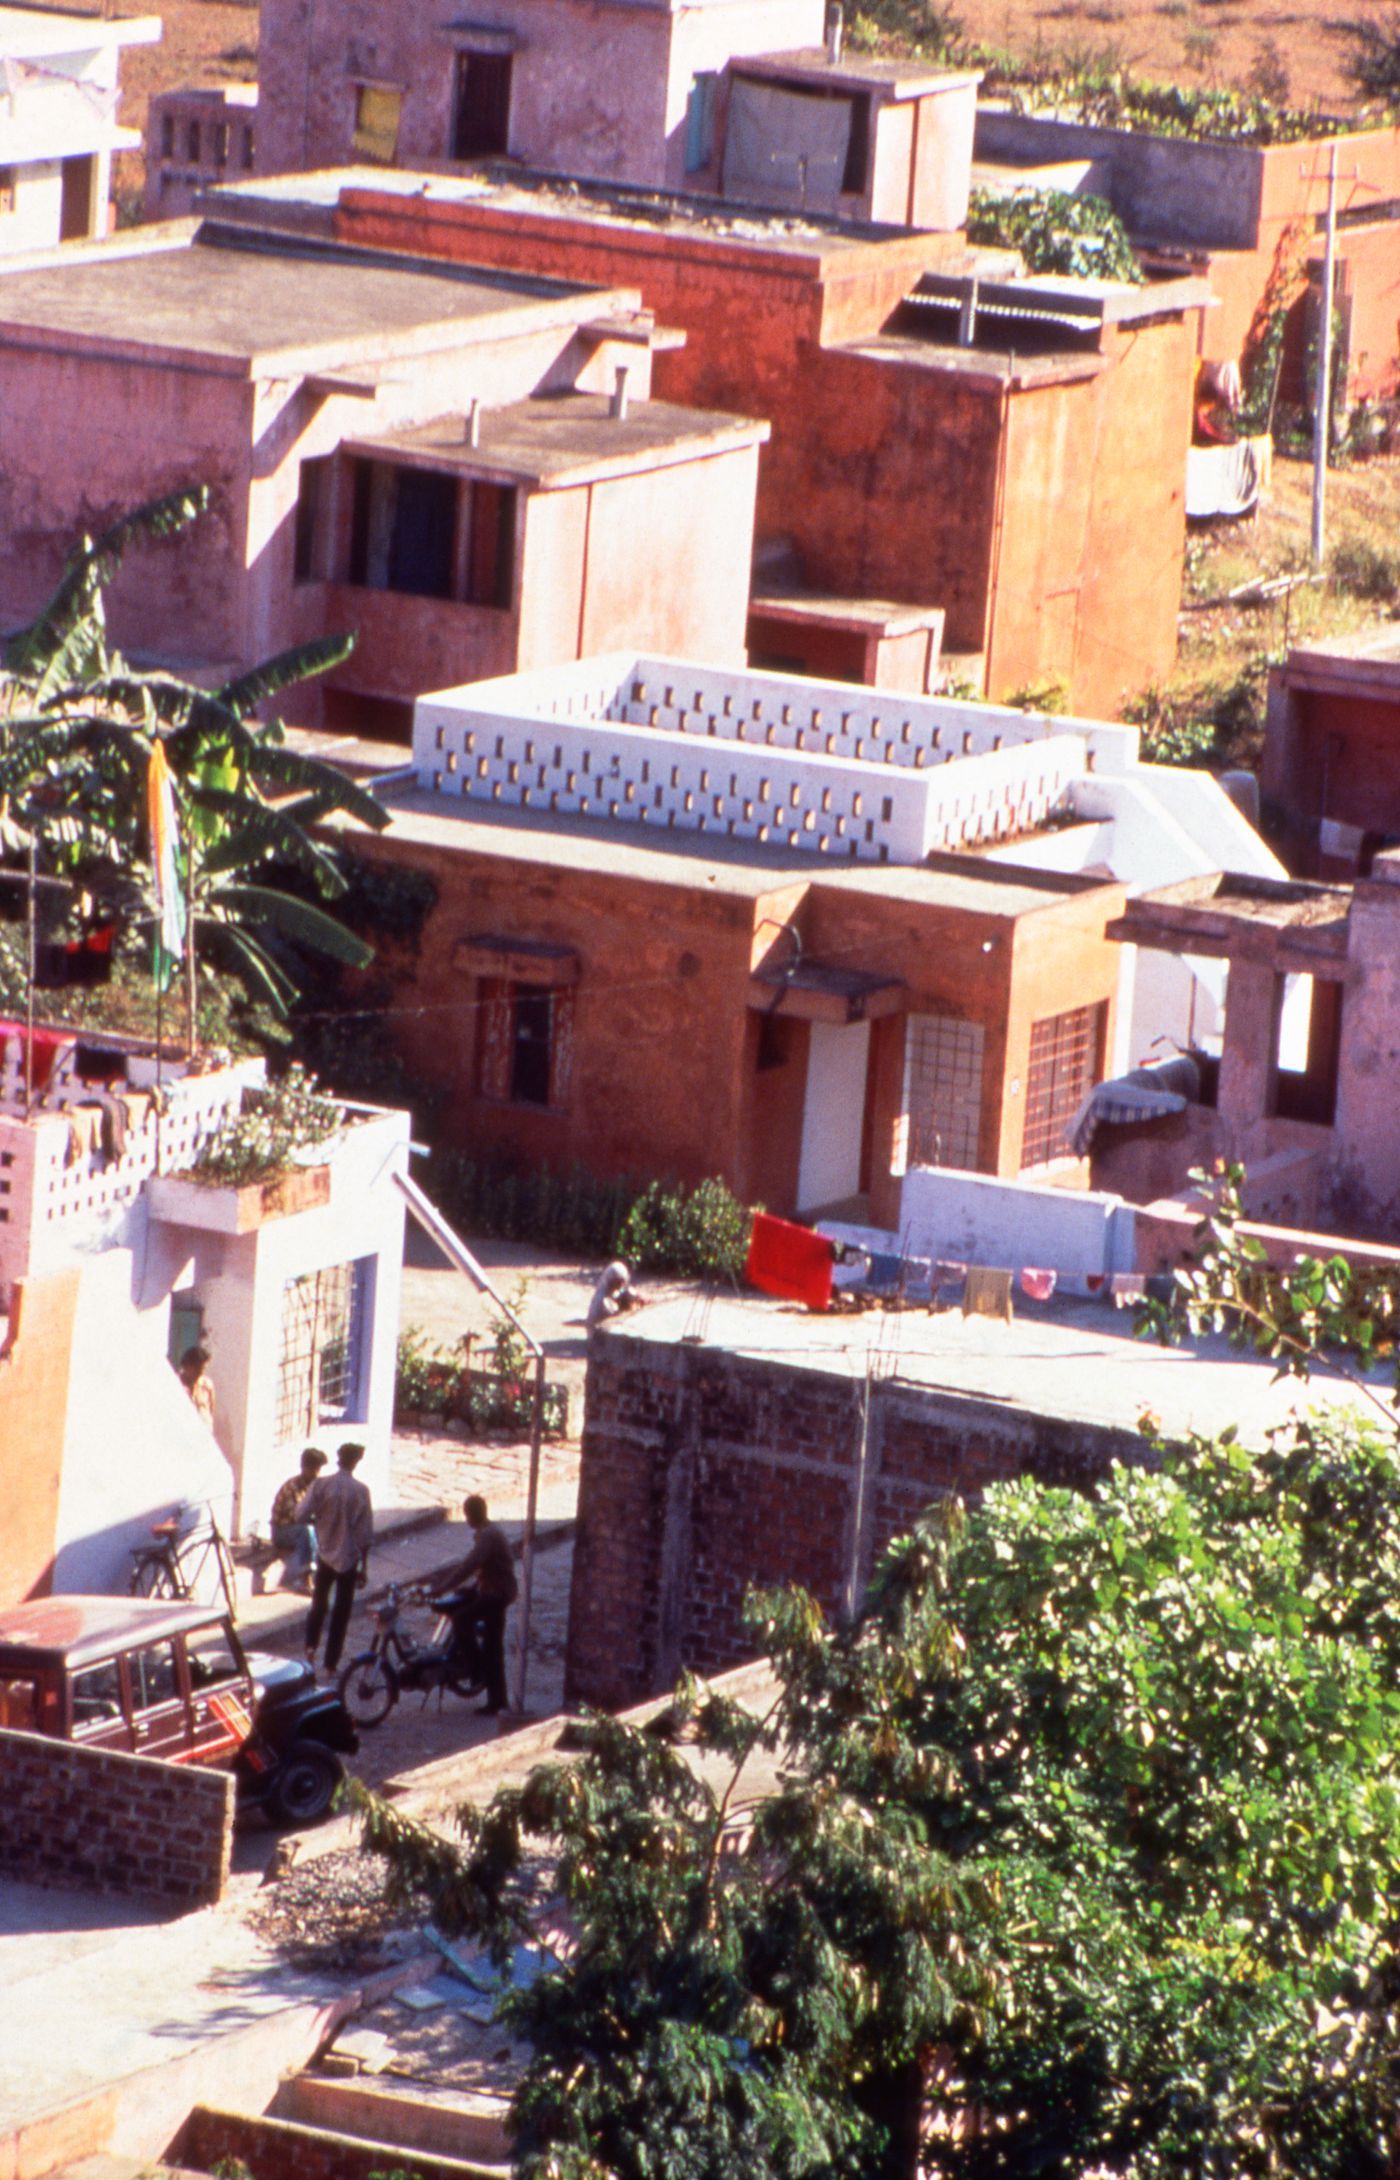 Photographs of the McGill layout for the Aranya Housing Project in Aranya, India